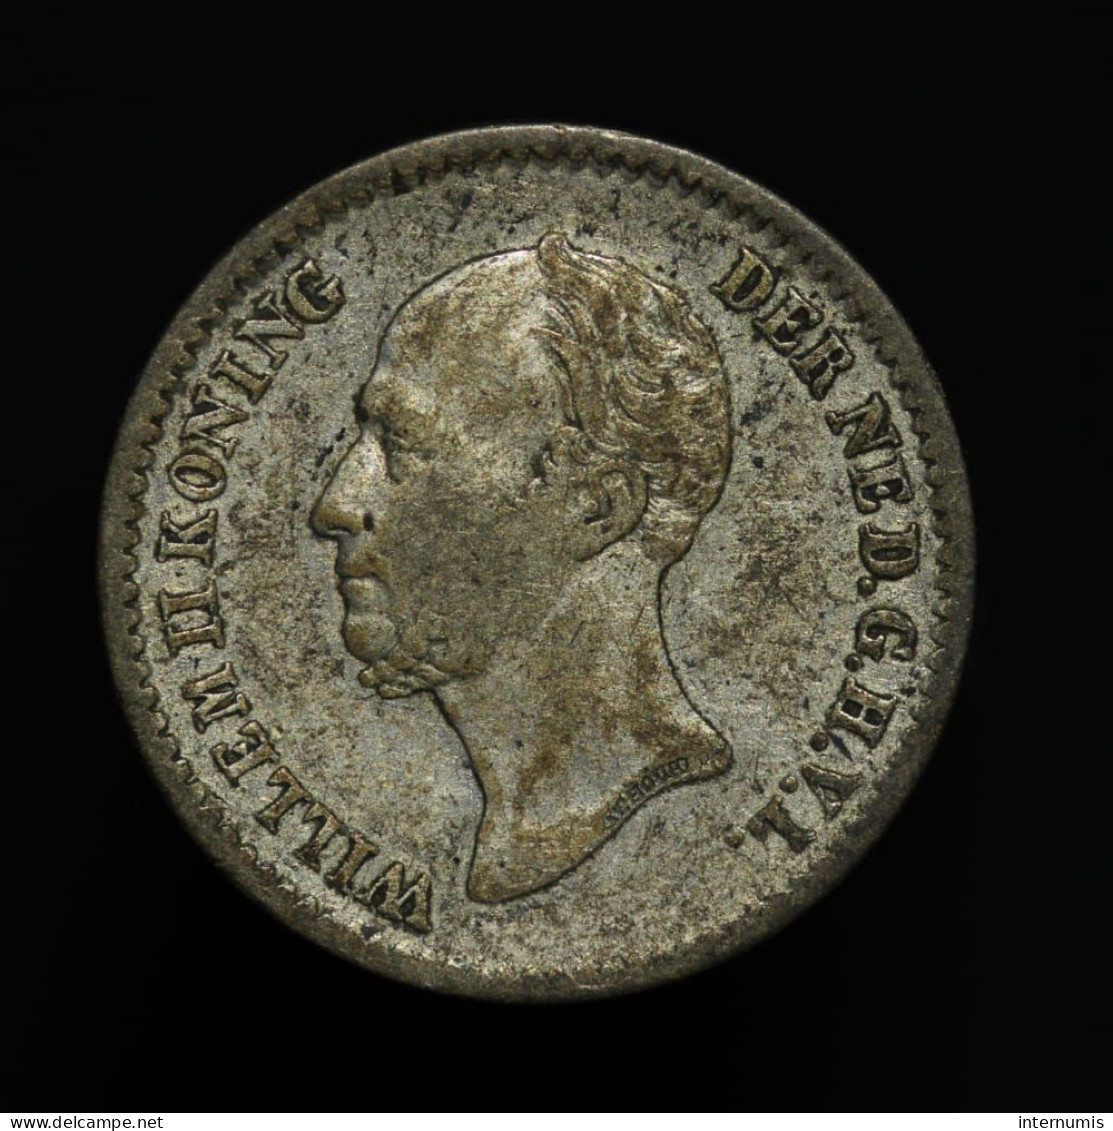 Pays Bas / Netherlands, Willem II, 10 Cents, 1849, Argent (Silver), TTB (EF), KM#75 - 1840-1849 : Willem II